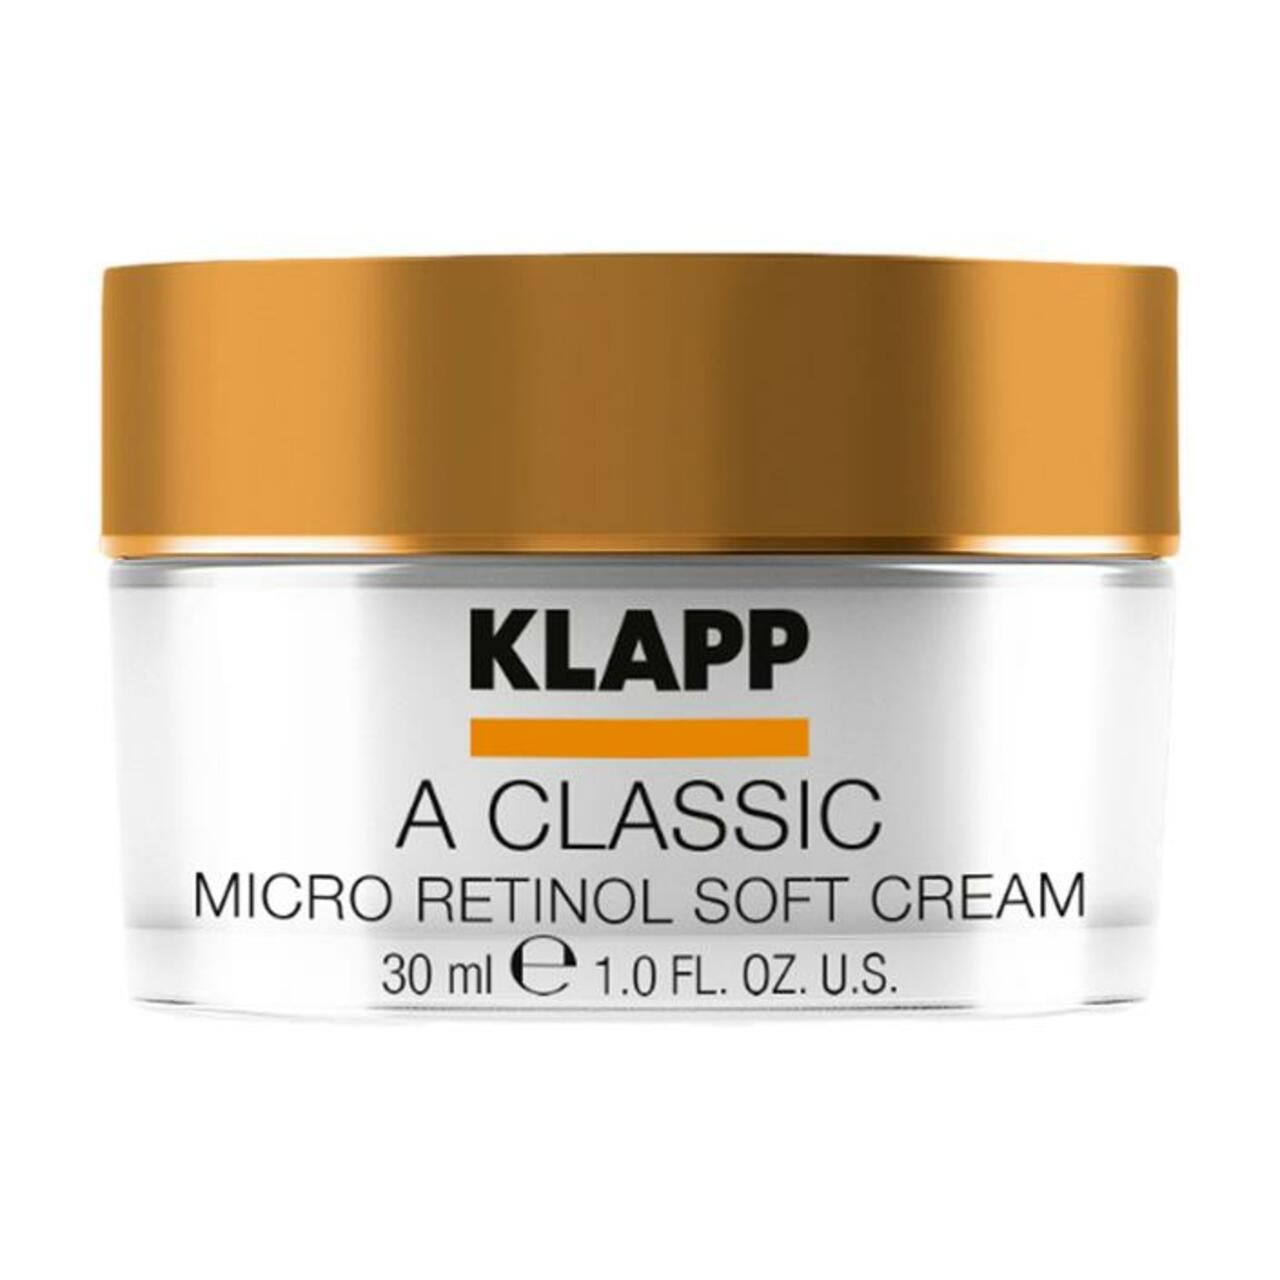 Klapp, A Classic Micro Retinol Soft Cream